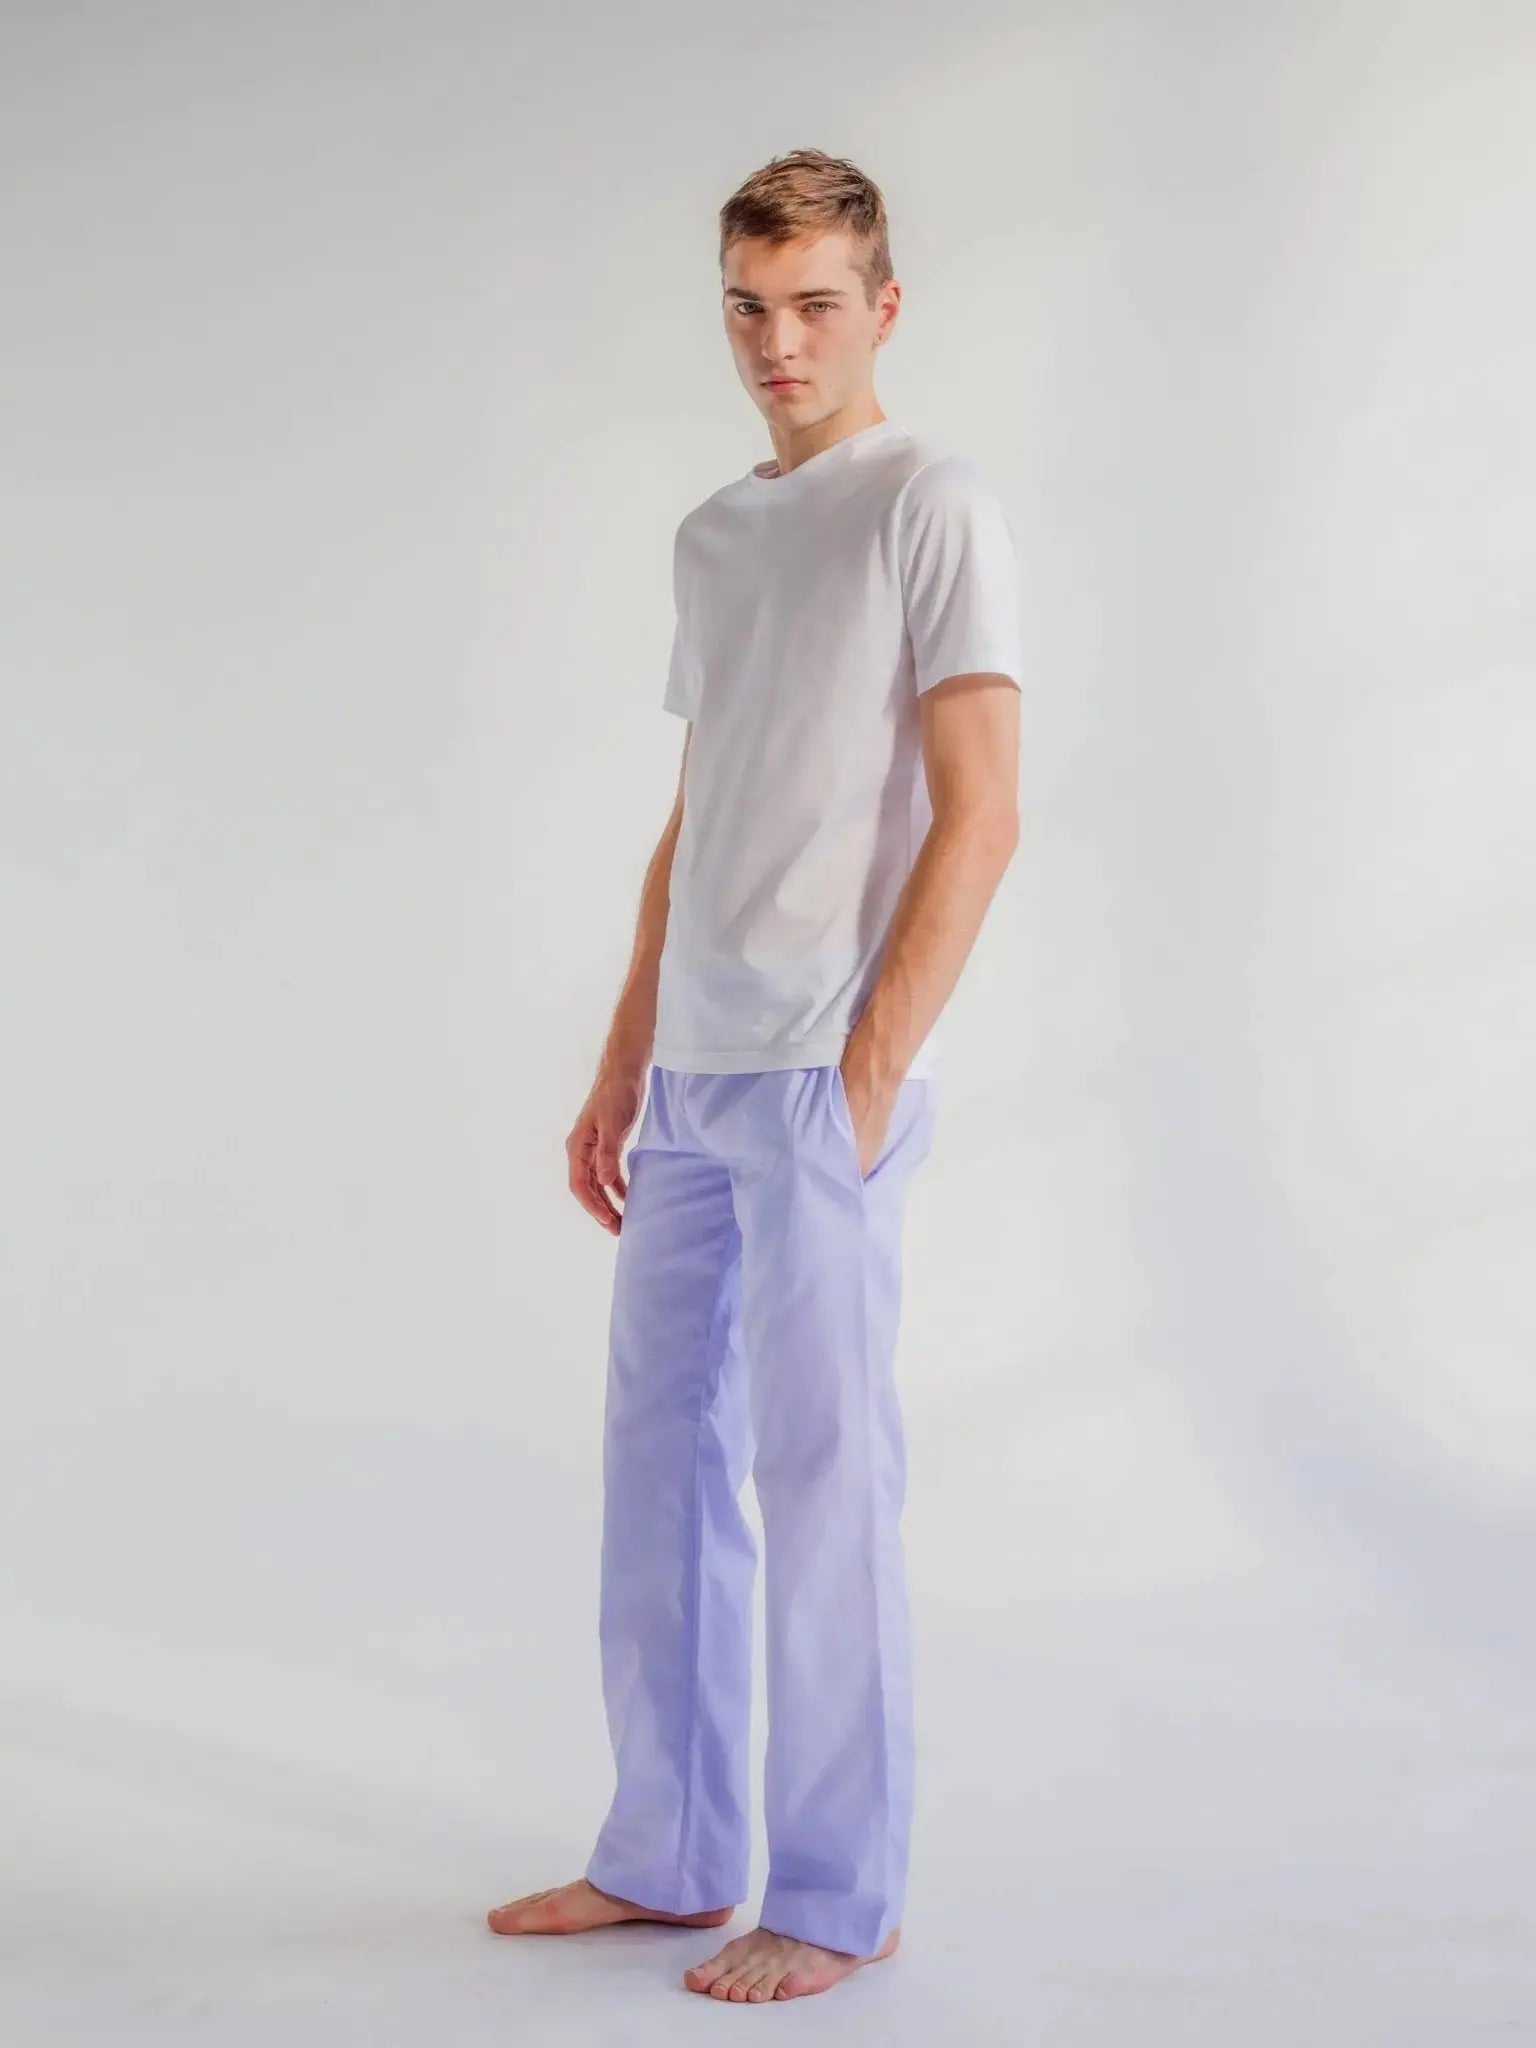 Buy Men's Pyjamas & Cotton Pajamas For Men - Apella